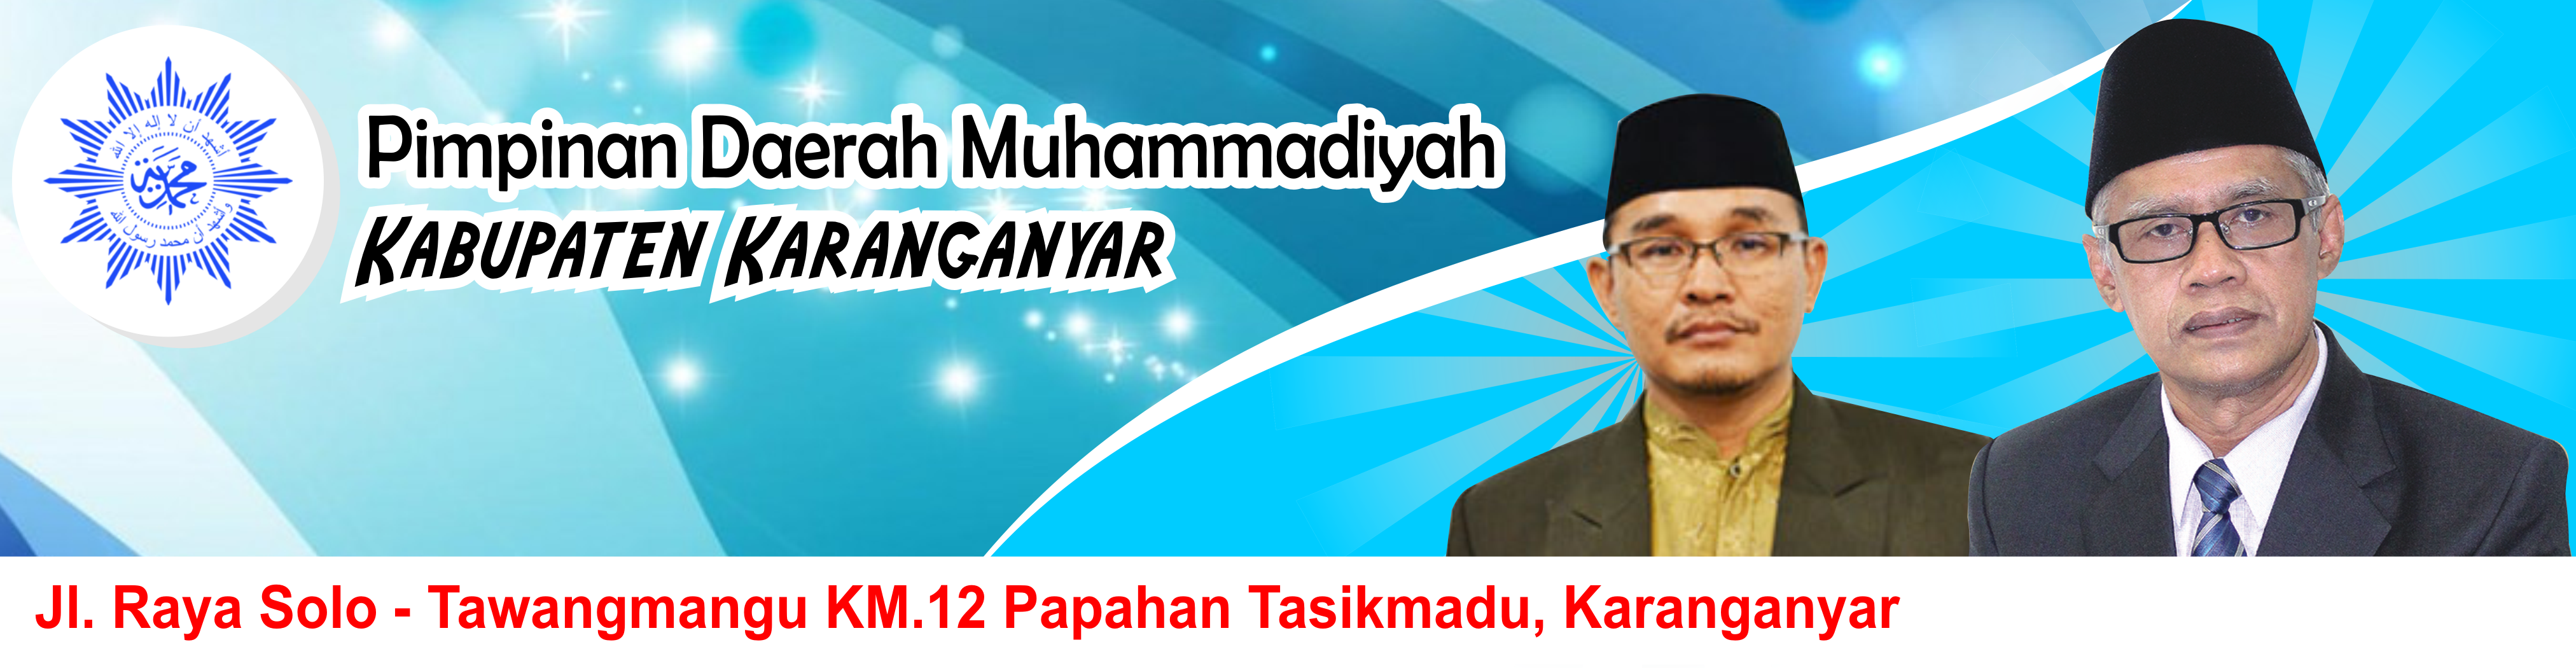 Majelis Pendidikan Tinggi Pimpinan Daerah Muhammadiyah Kabupaten Karanganyar